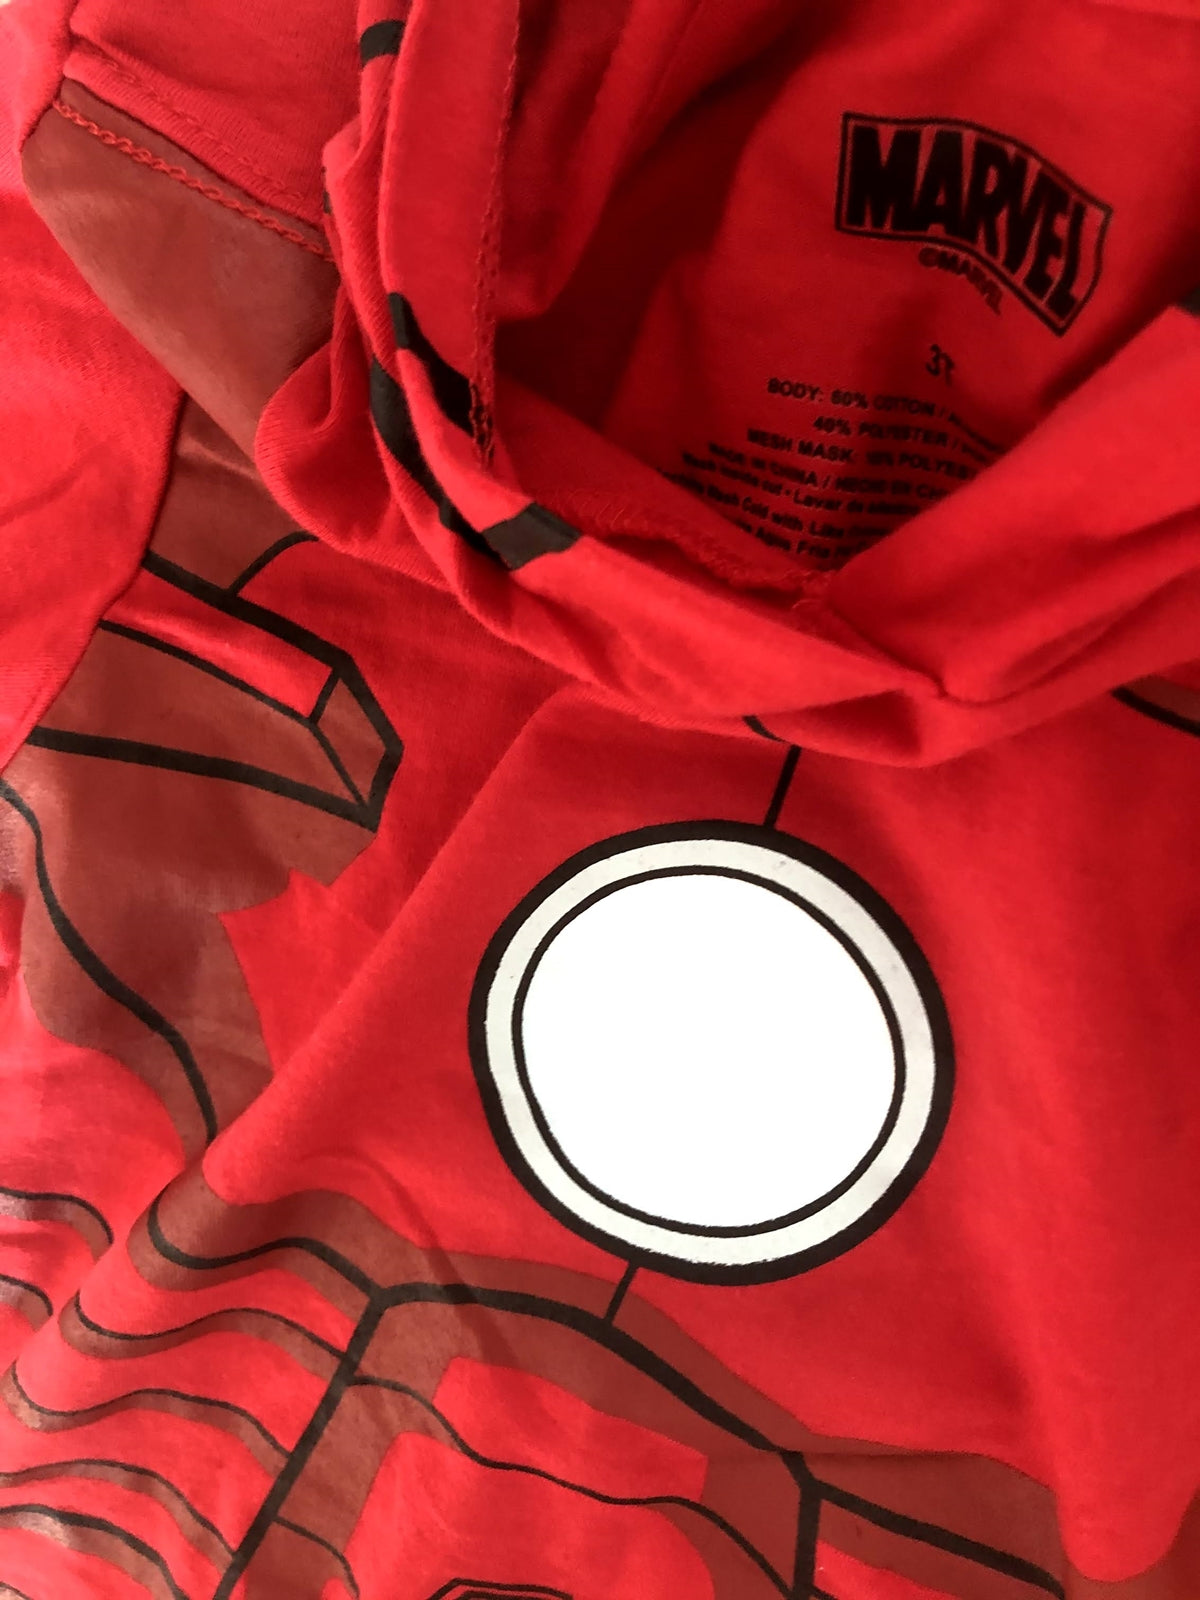 Iron Man Kids Superhero Hoodie Shirt A10433K